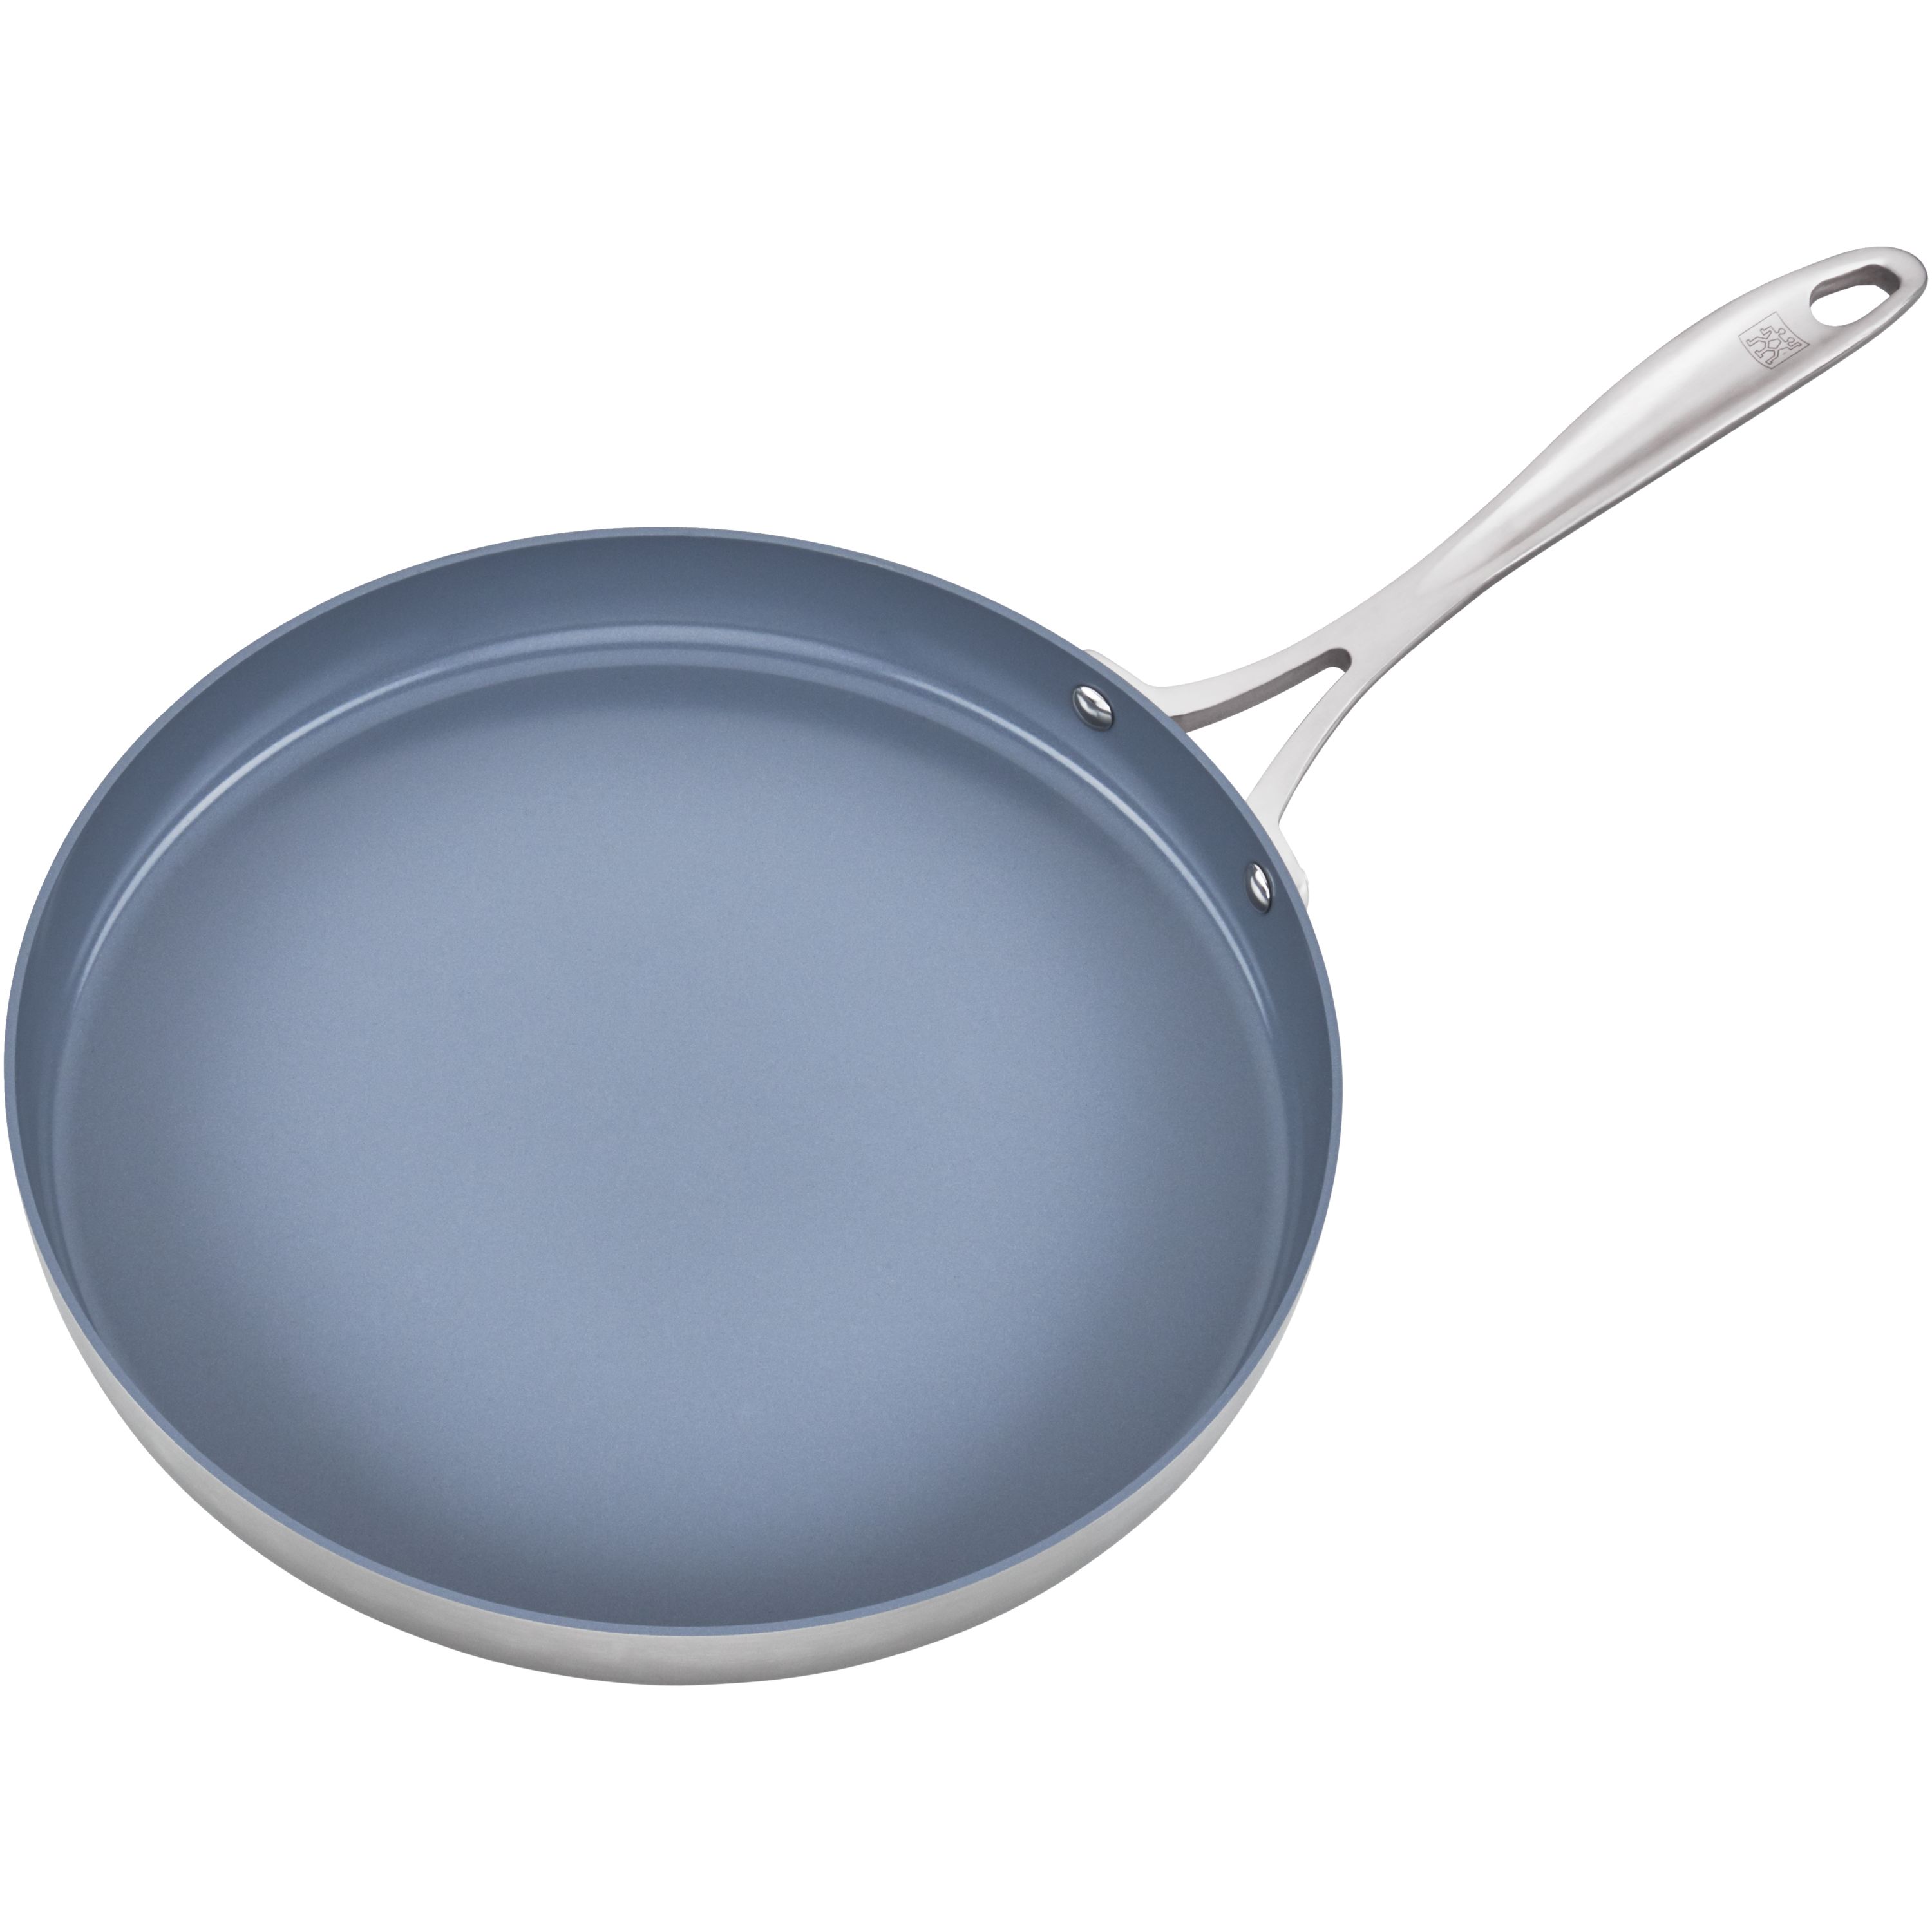 ZWILLING Spirit Non-Stick Fry Pan, 12-Inch Ceramic Fry Pan, Stainless Steel